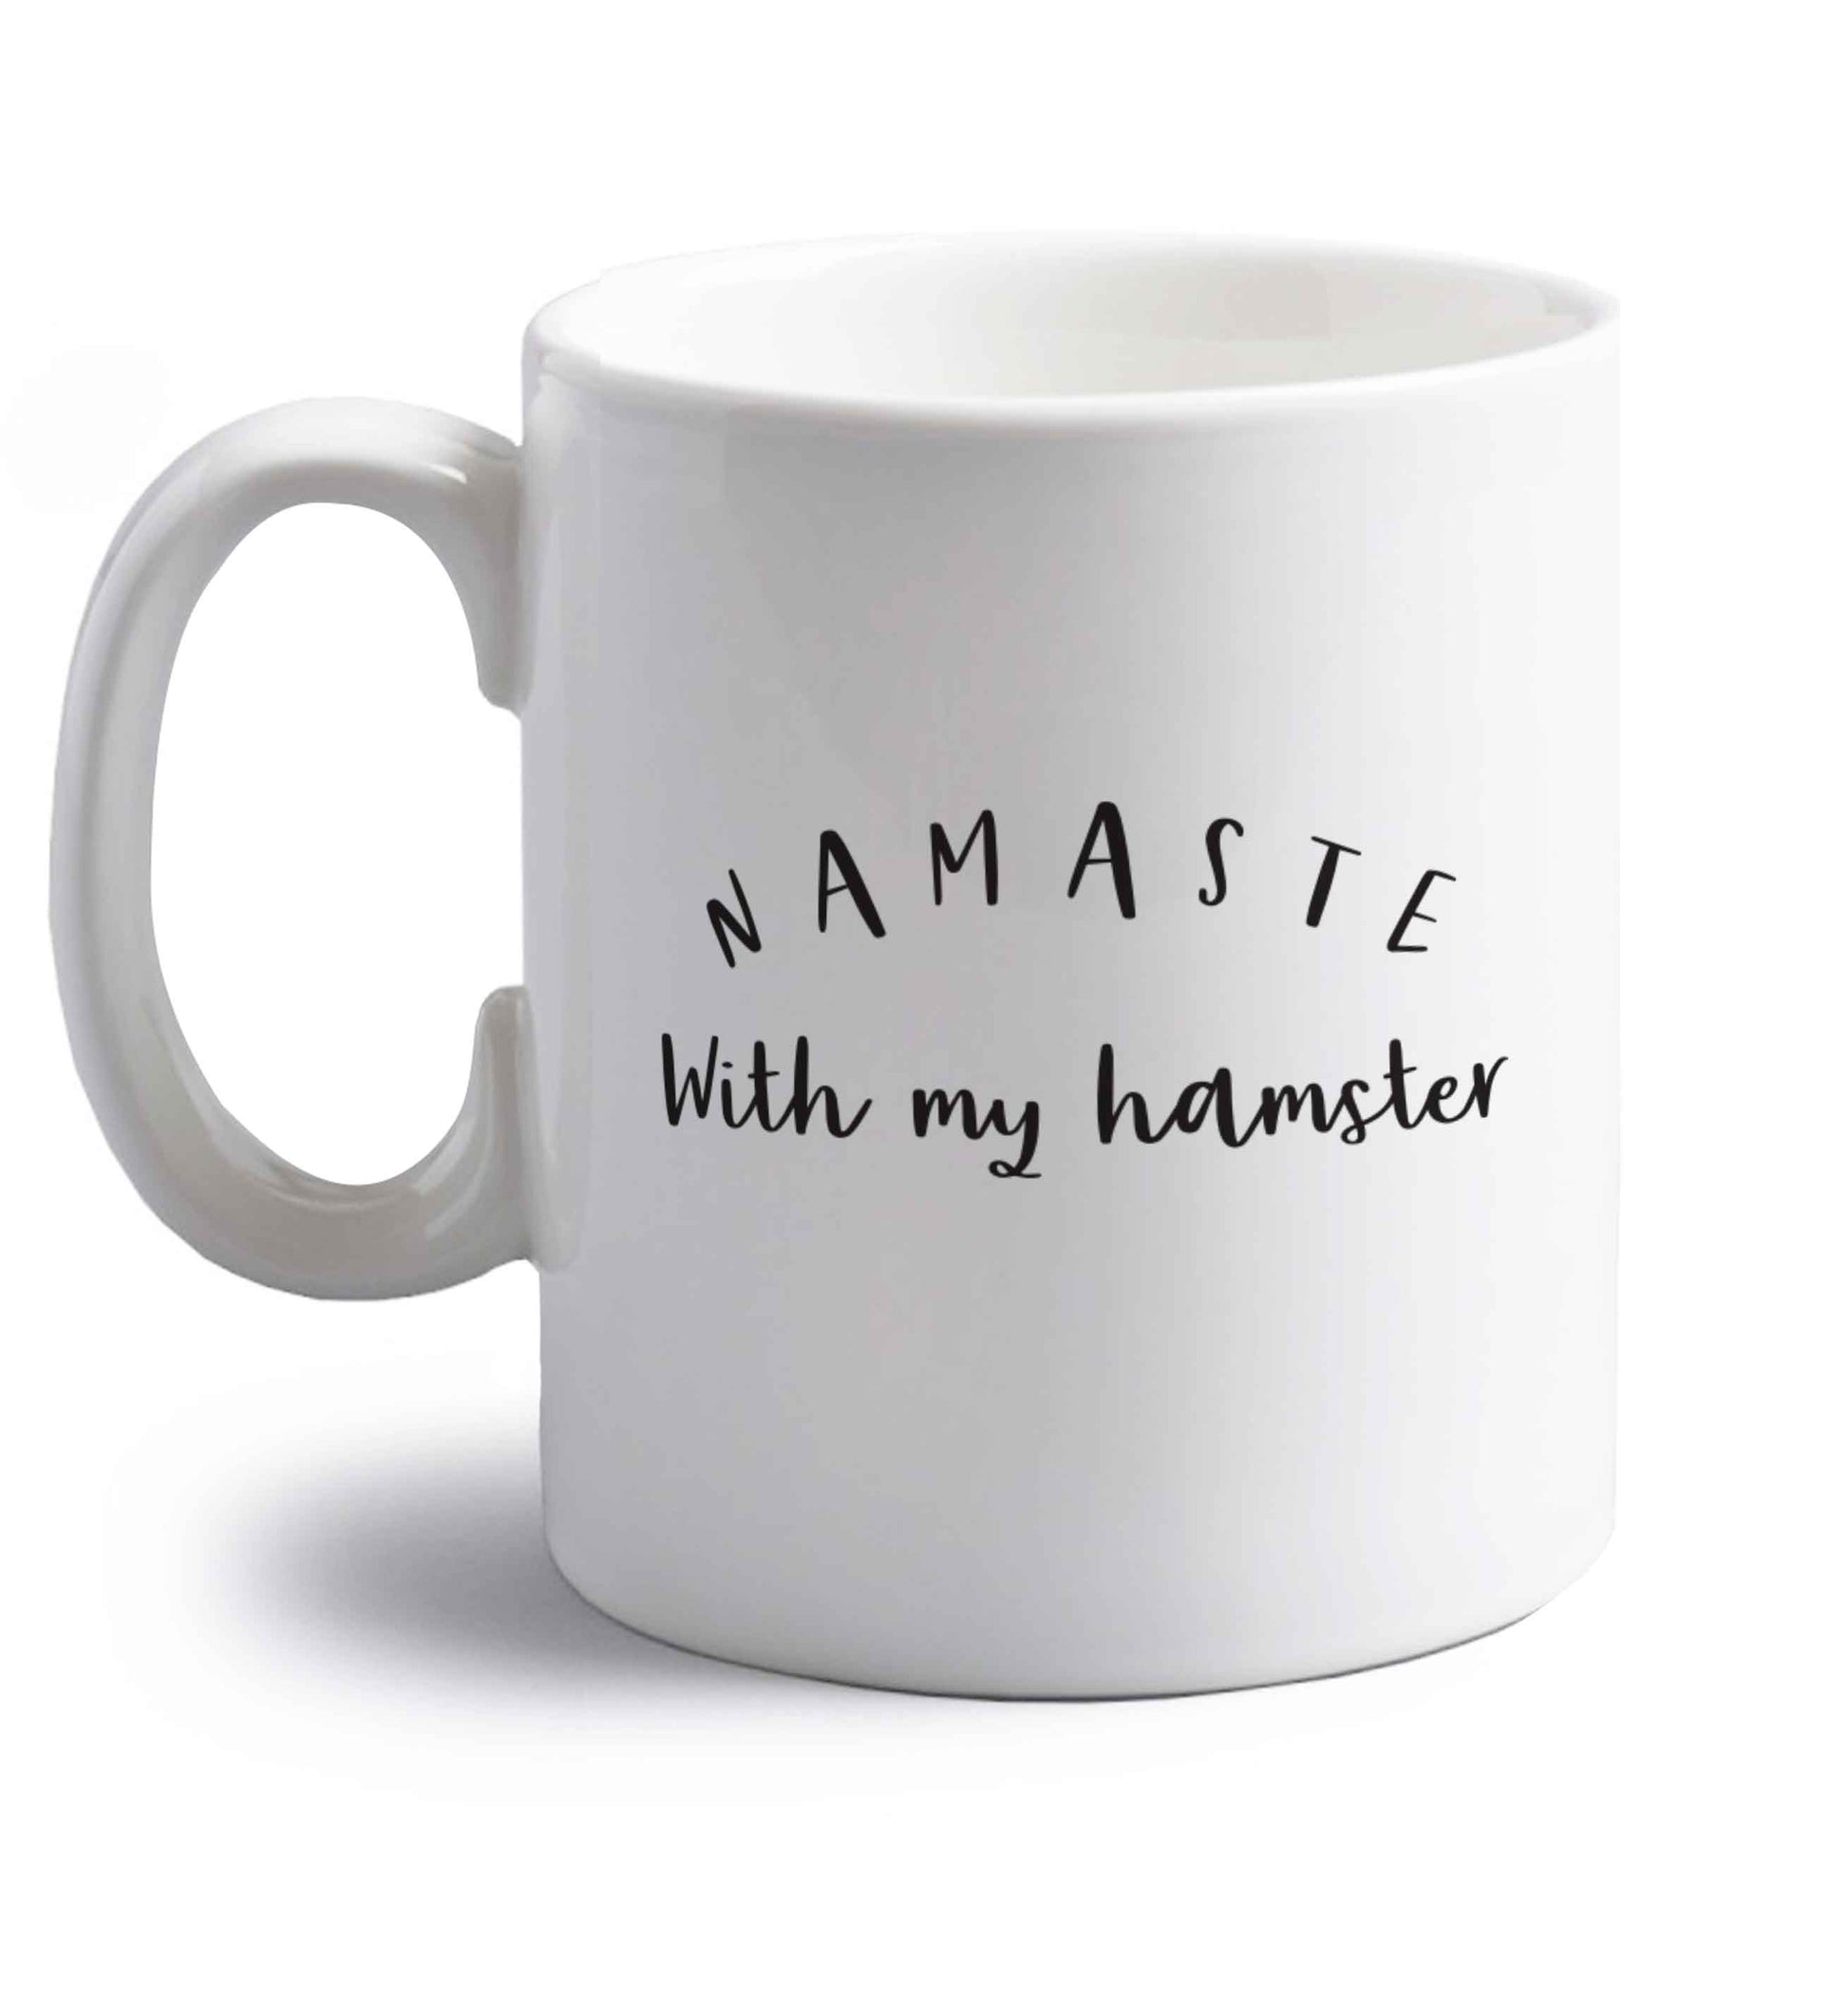 Namaste with my hamster right handed white ceramic mug 